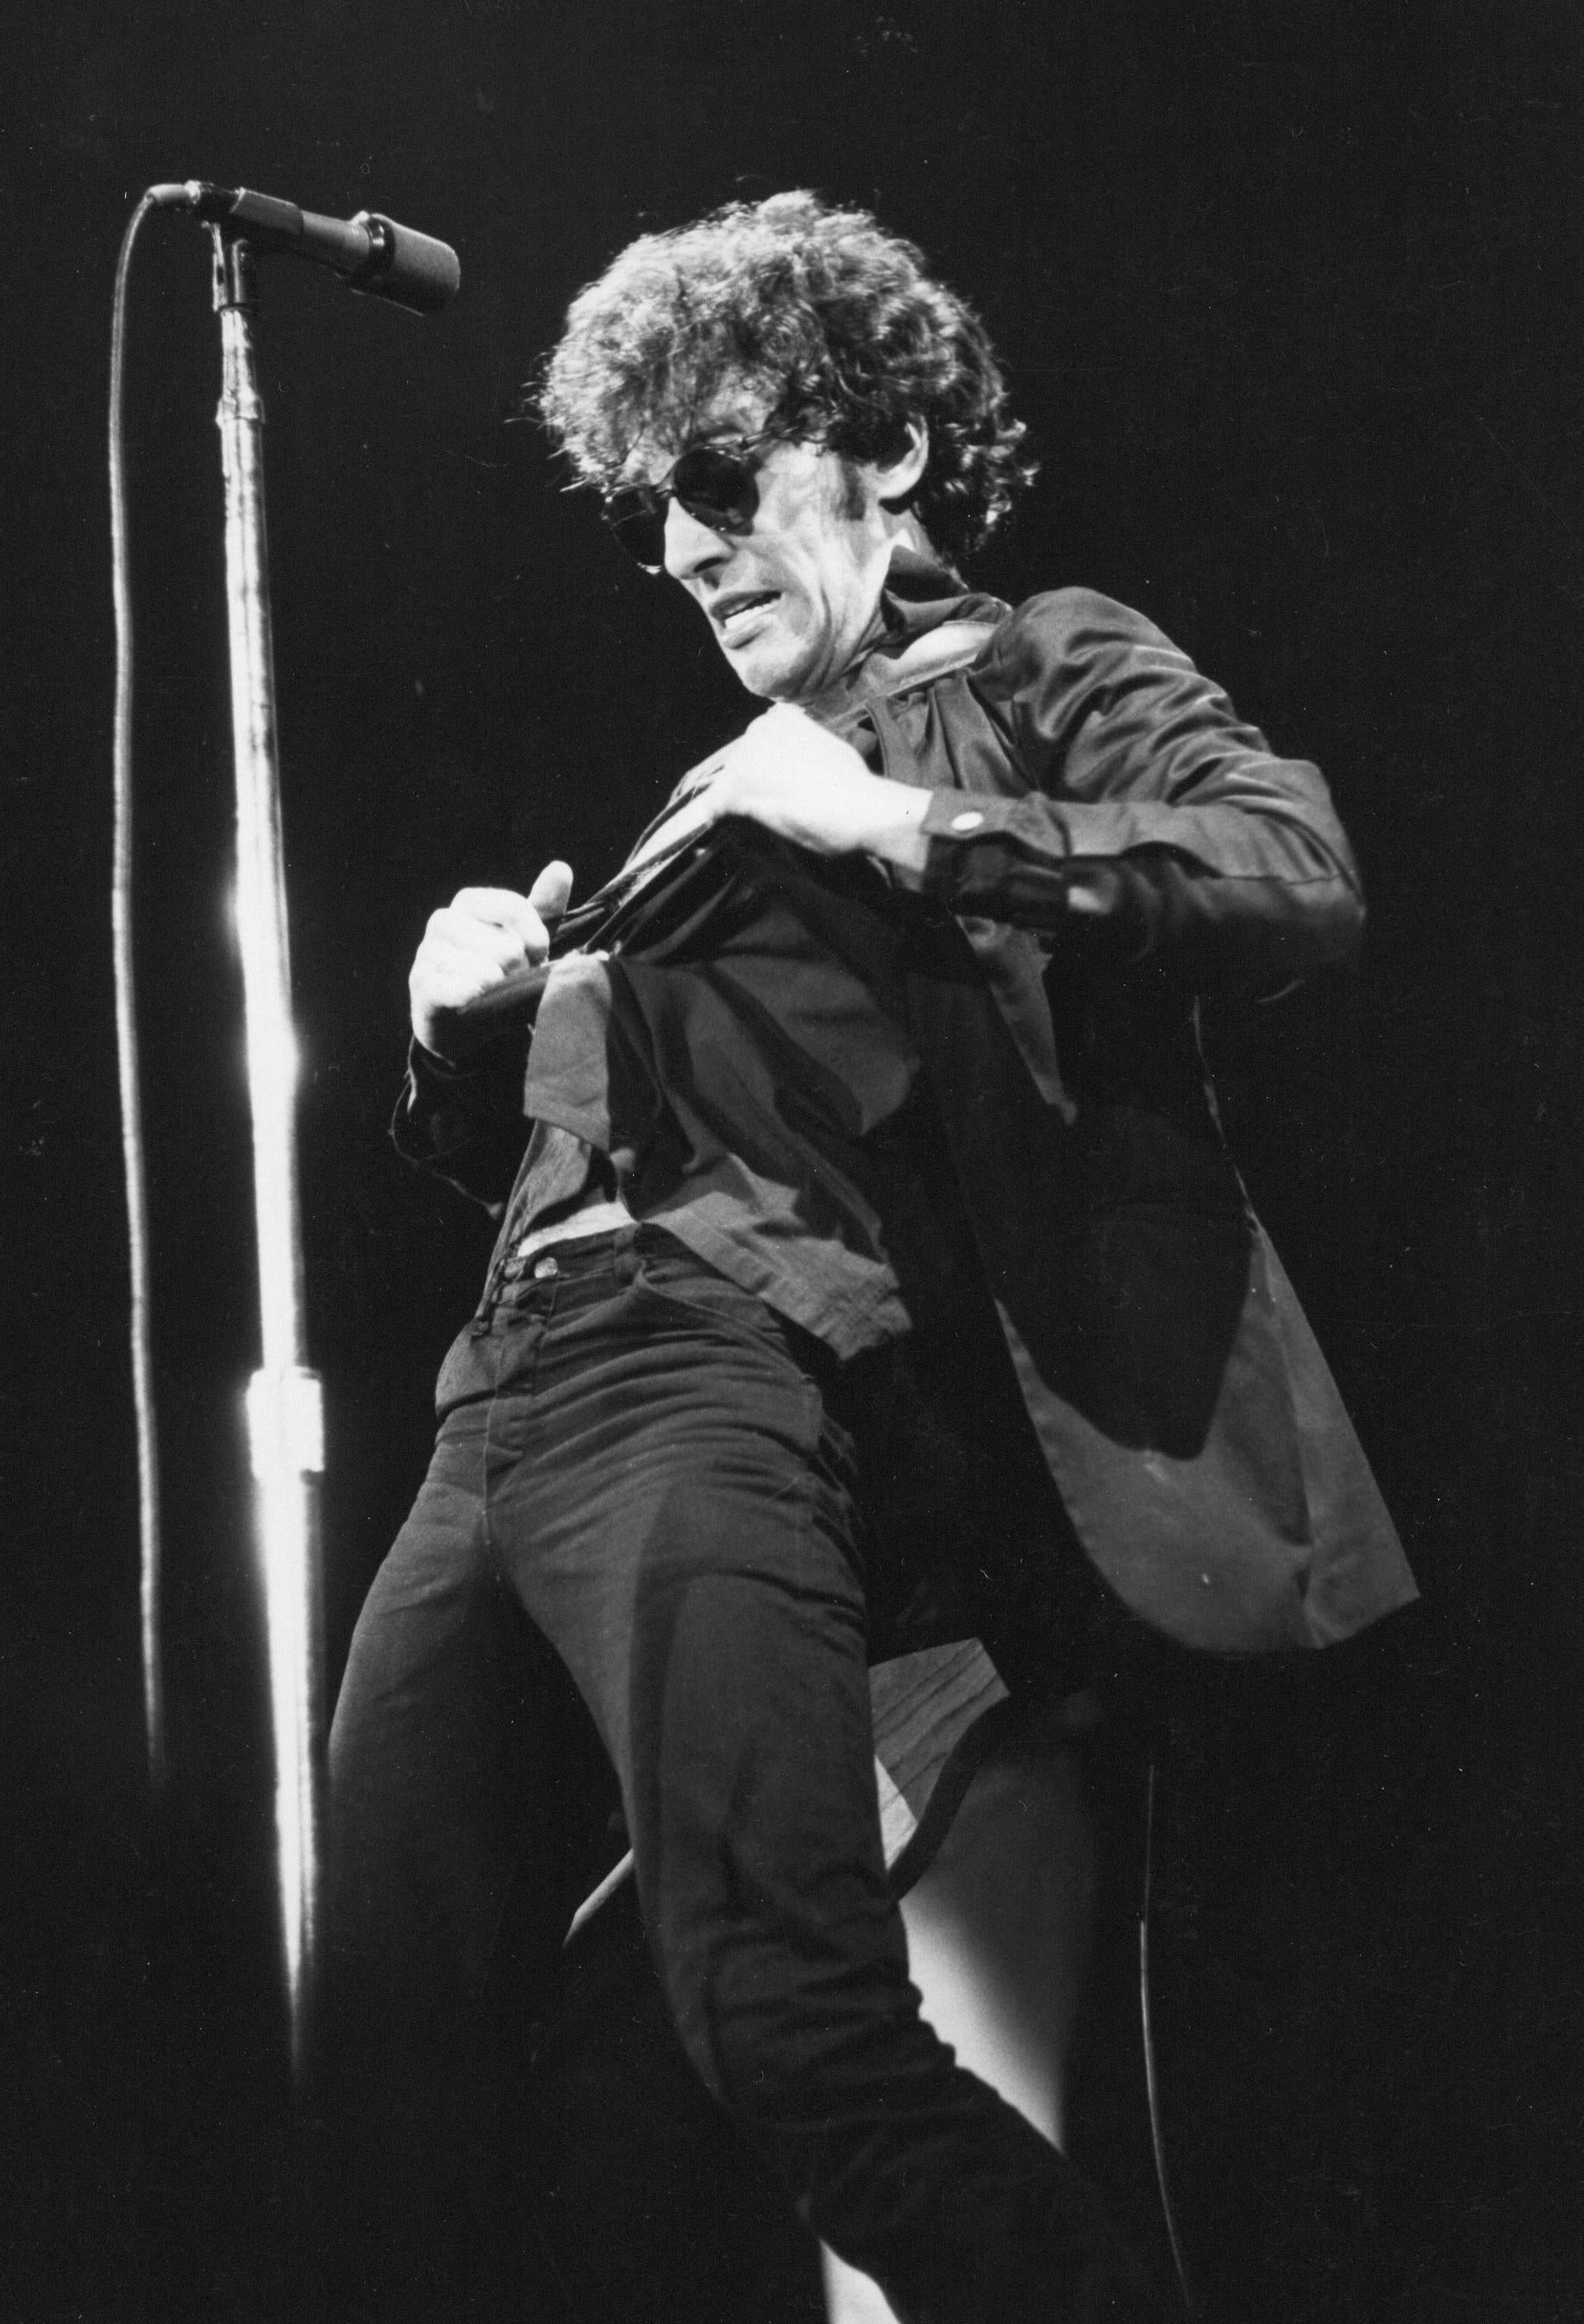 Michael Putland Portrait Photograph - Bruce Springsteen in "Rosalita" Video Concert II Vintage Original Photograph